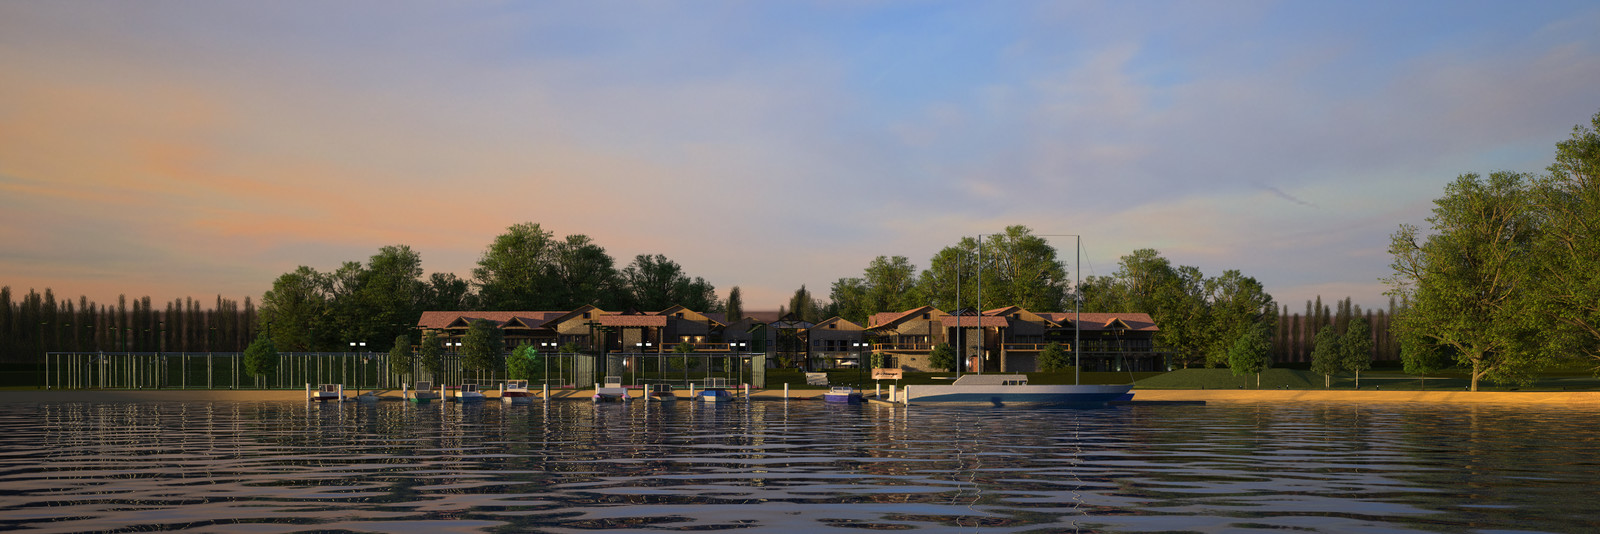 Original model from 2014
La Grange- Rivendell Resort:
Lake to Shore 01 2Pt 02 Dusk 02
SU + Thea Render 
